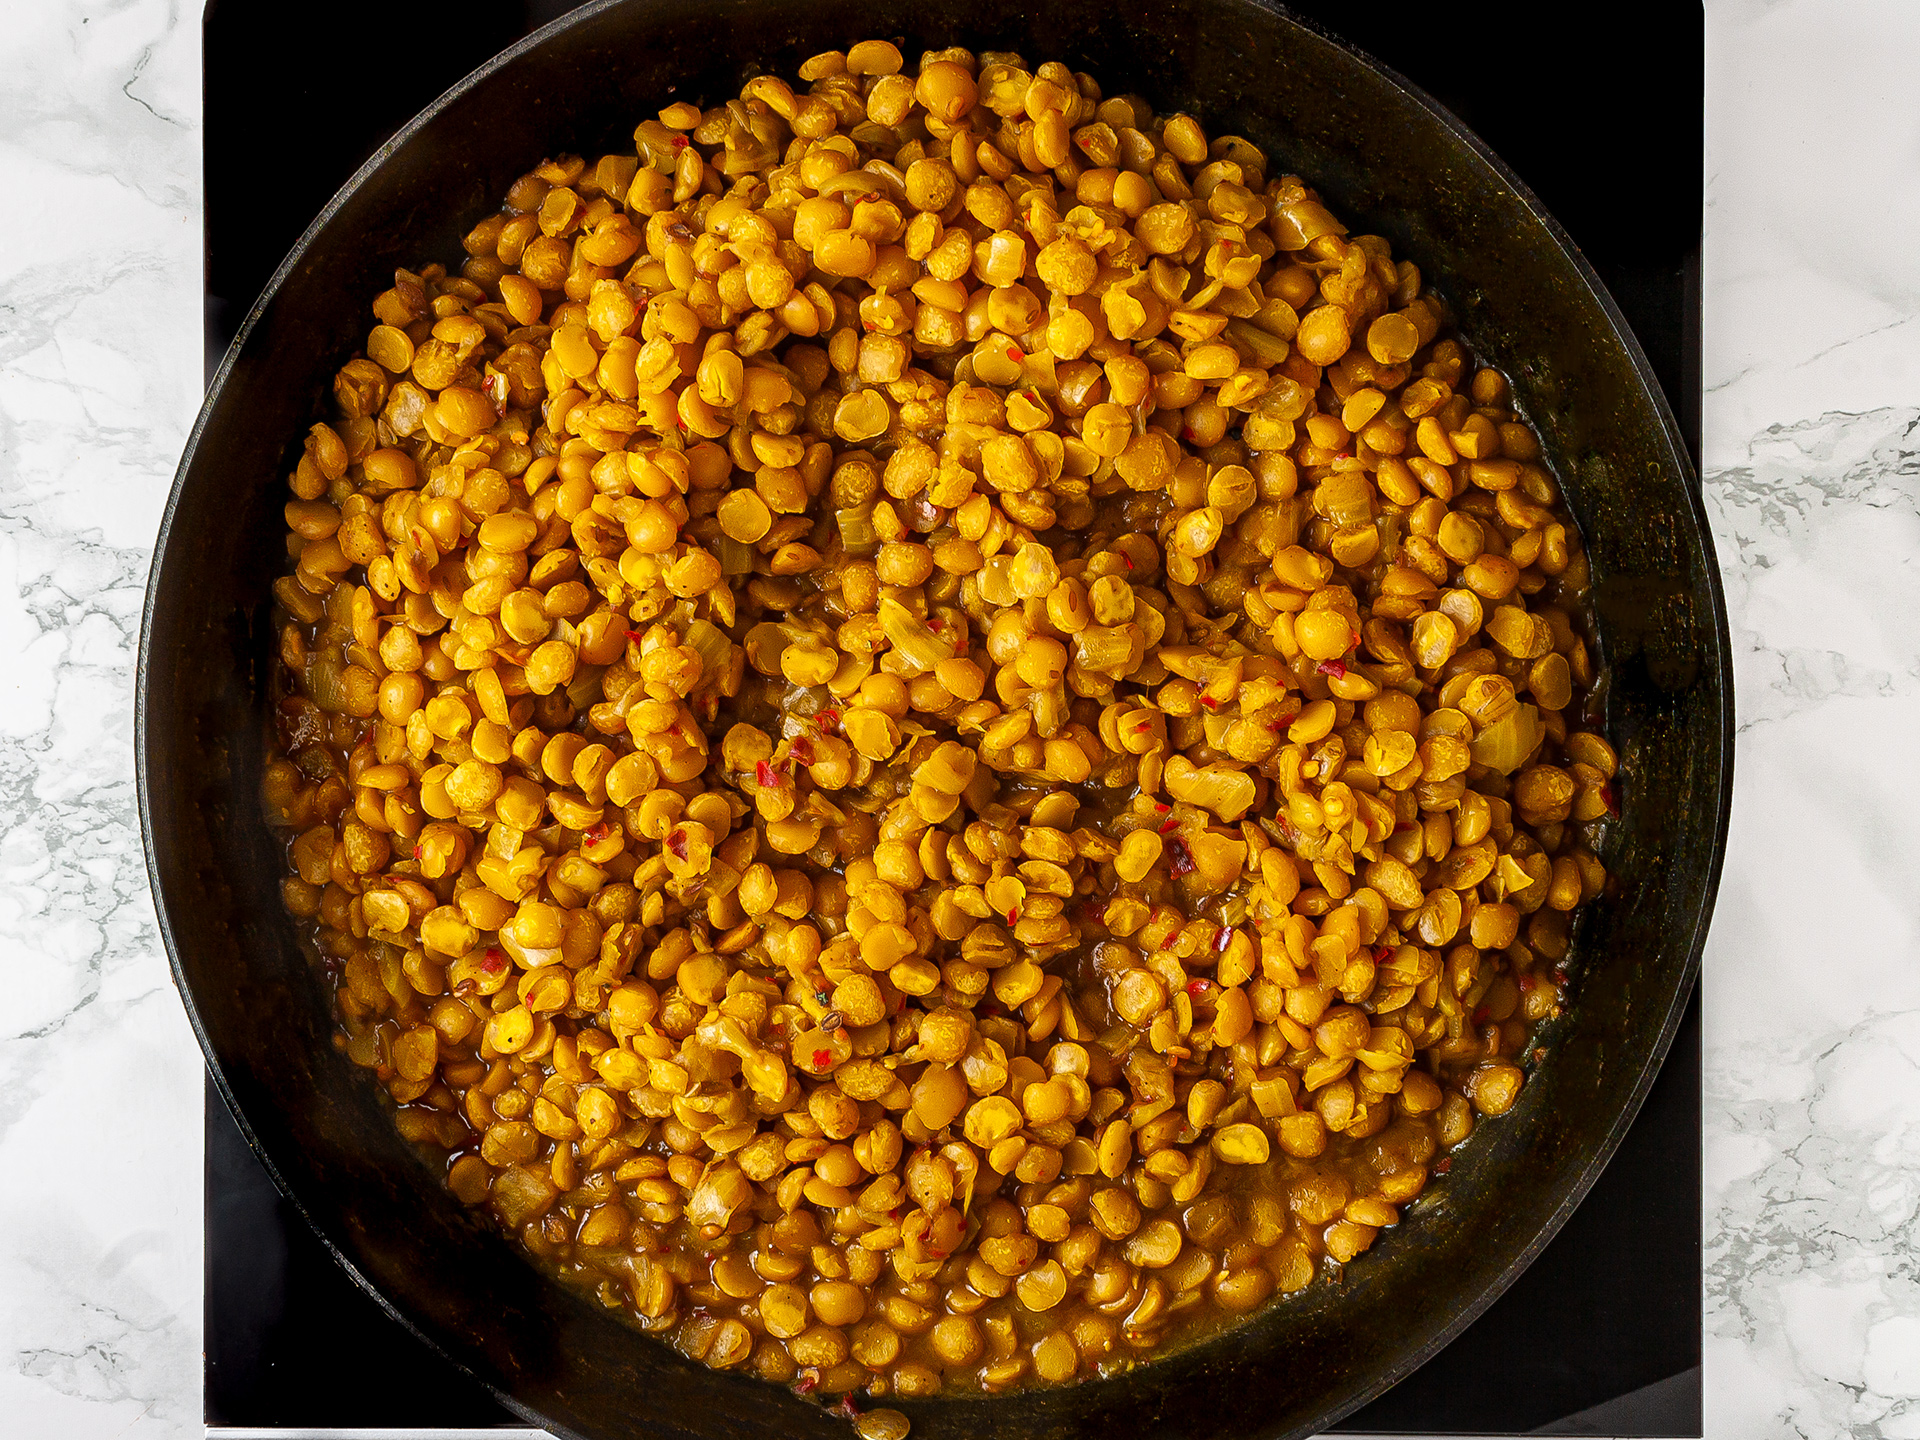 Ethiopian yellow split peas stew cooked in the pan.